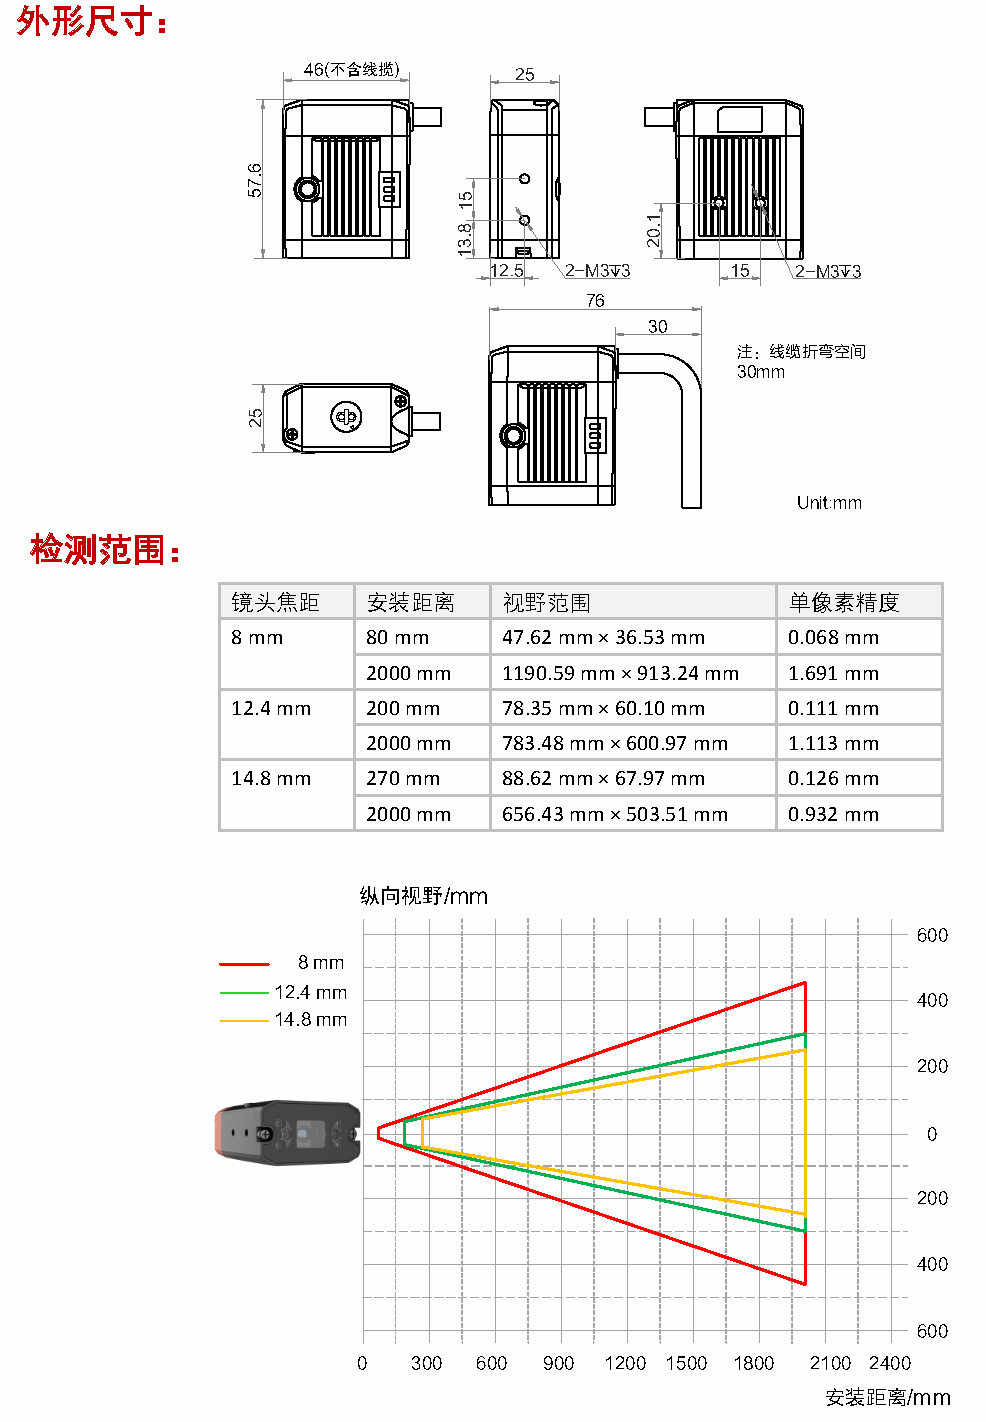 MV-SC2004EC 40万像素彩色SC2000E视觉传感器-捷利得(北京)自动化科技有限公司